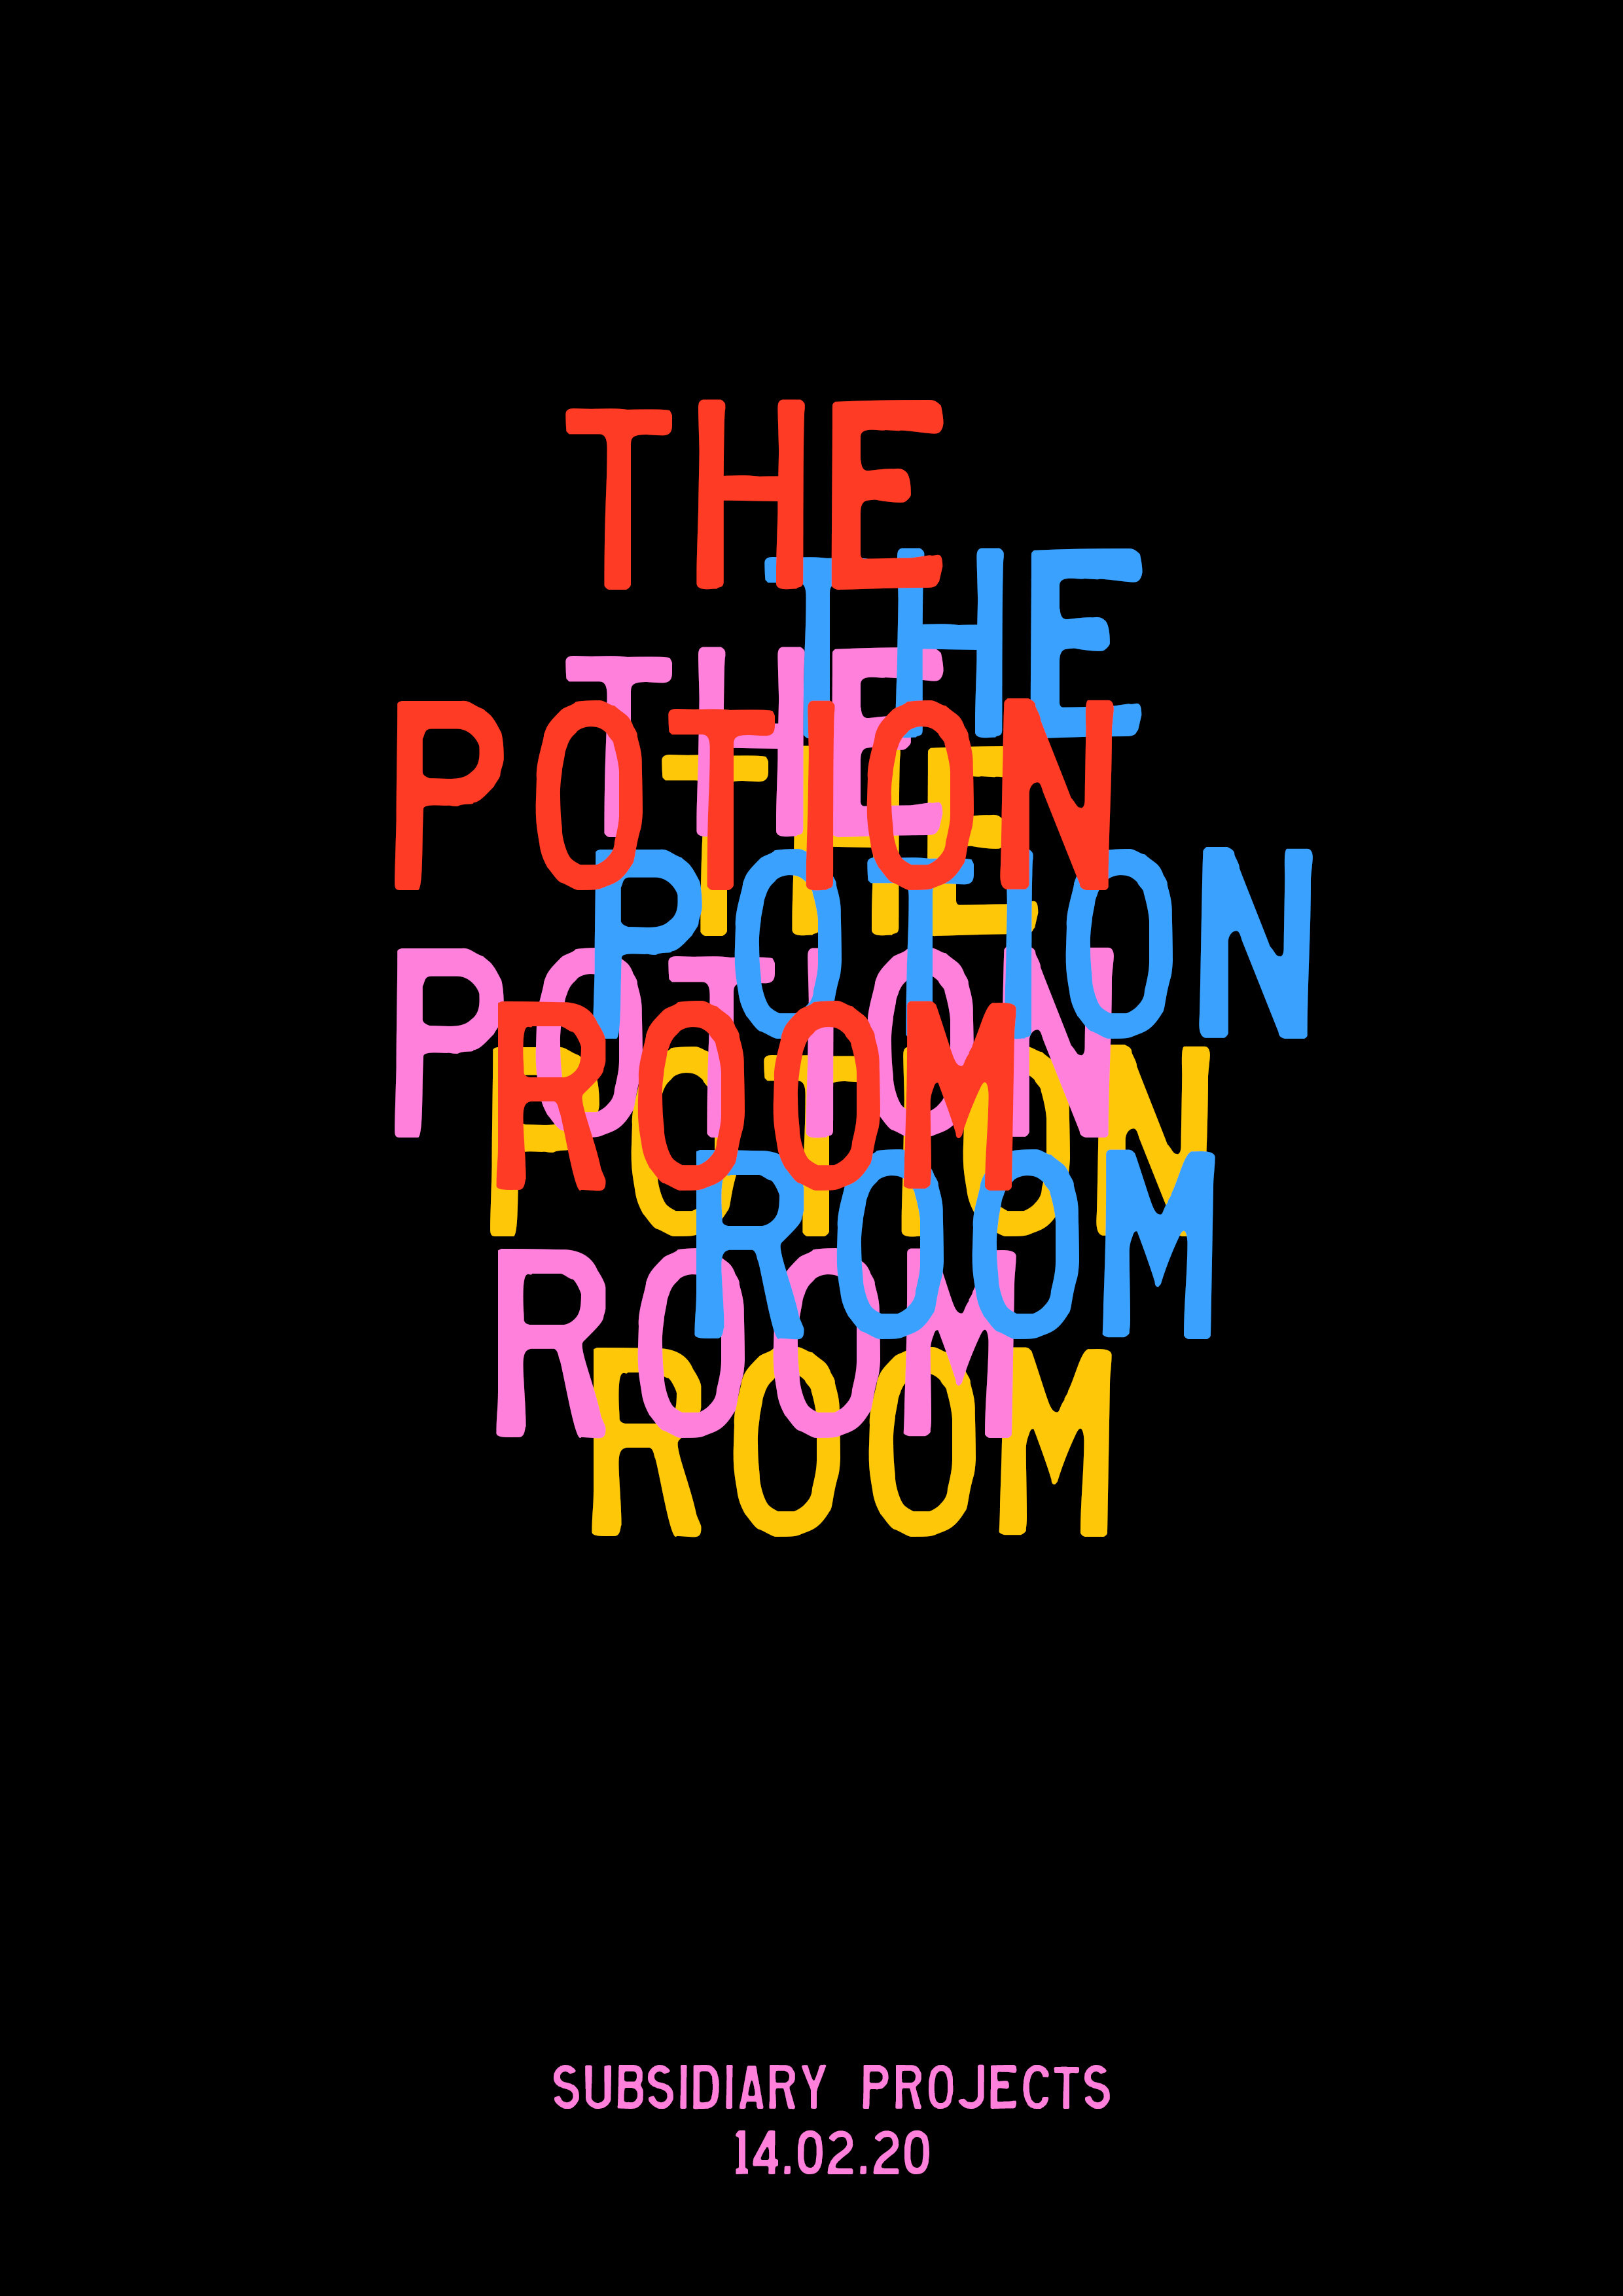 THE POTION ROOM_master.jpg